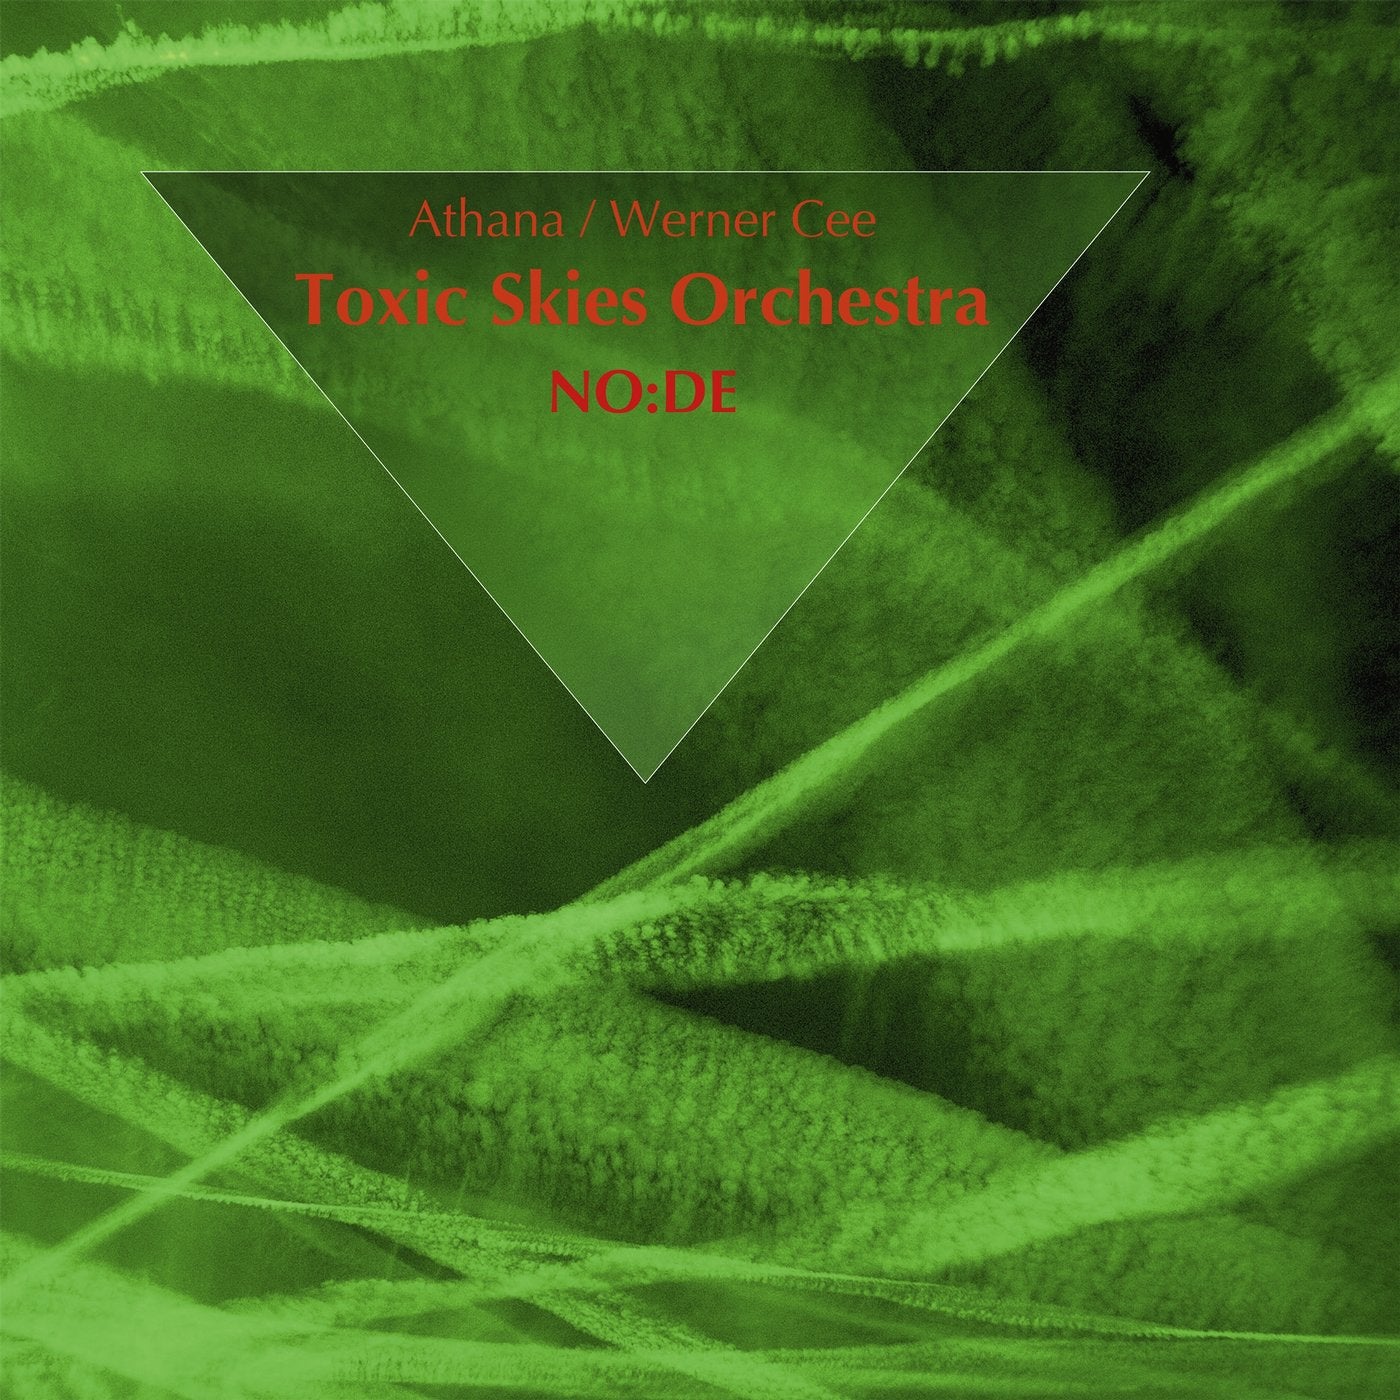 Toxic Skies Orchestra NO:DE